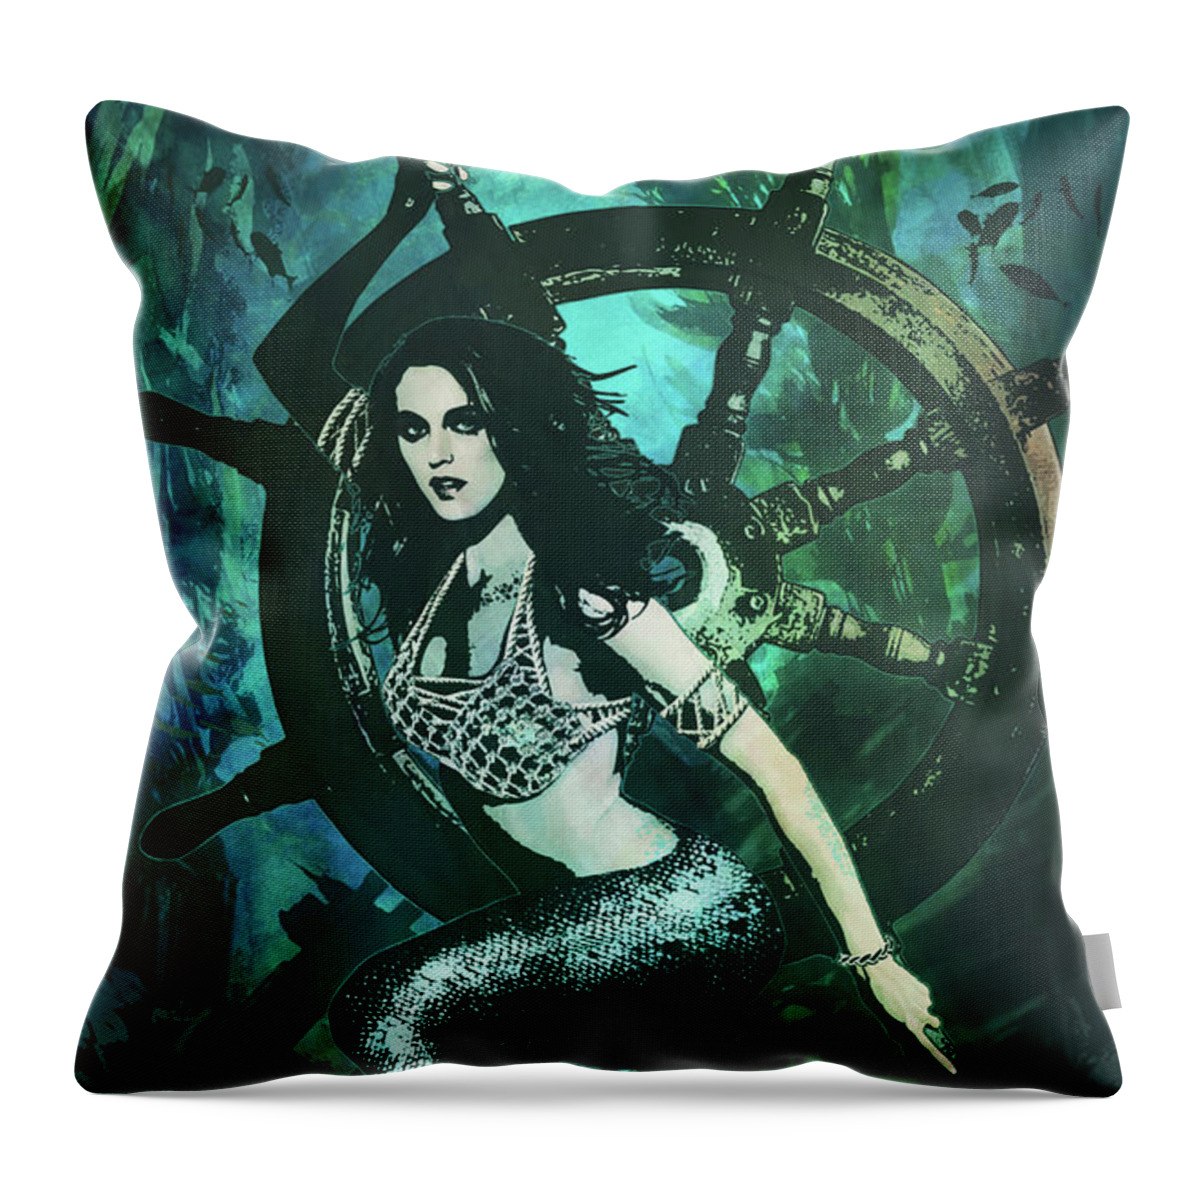 Mermaid Throw Pillow featuring the digital art Mermaid by Jason Casteel